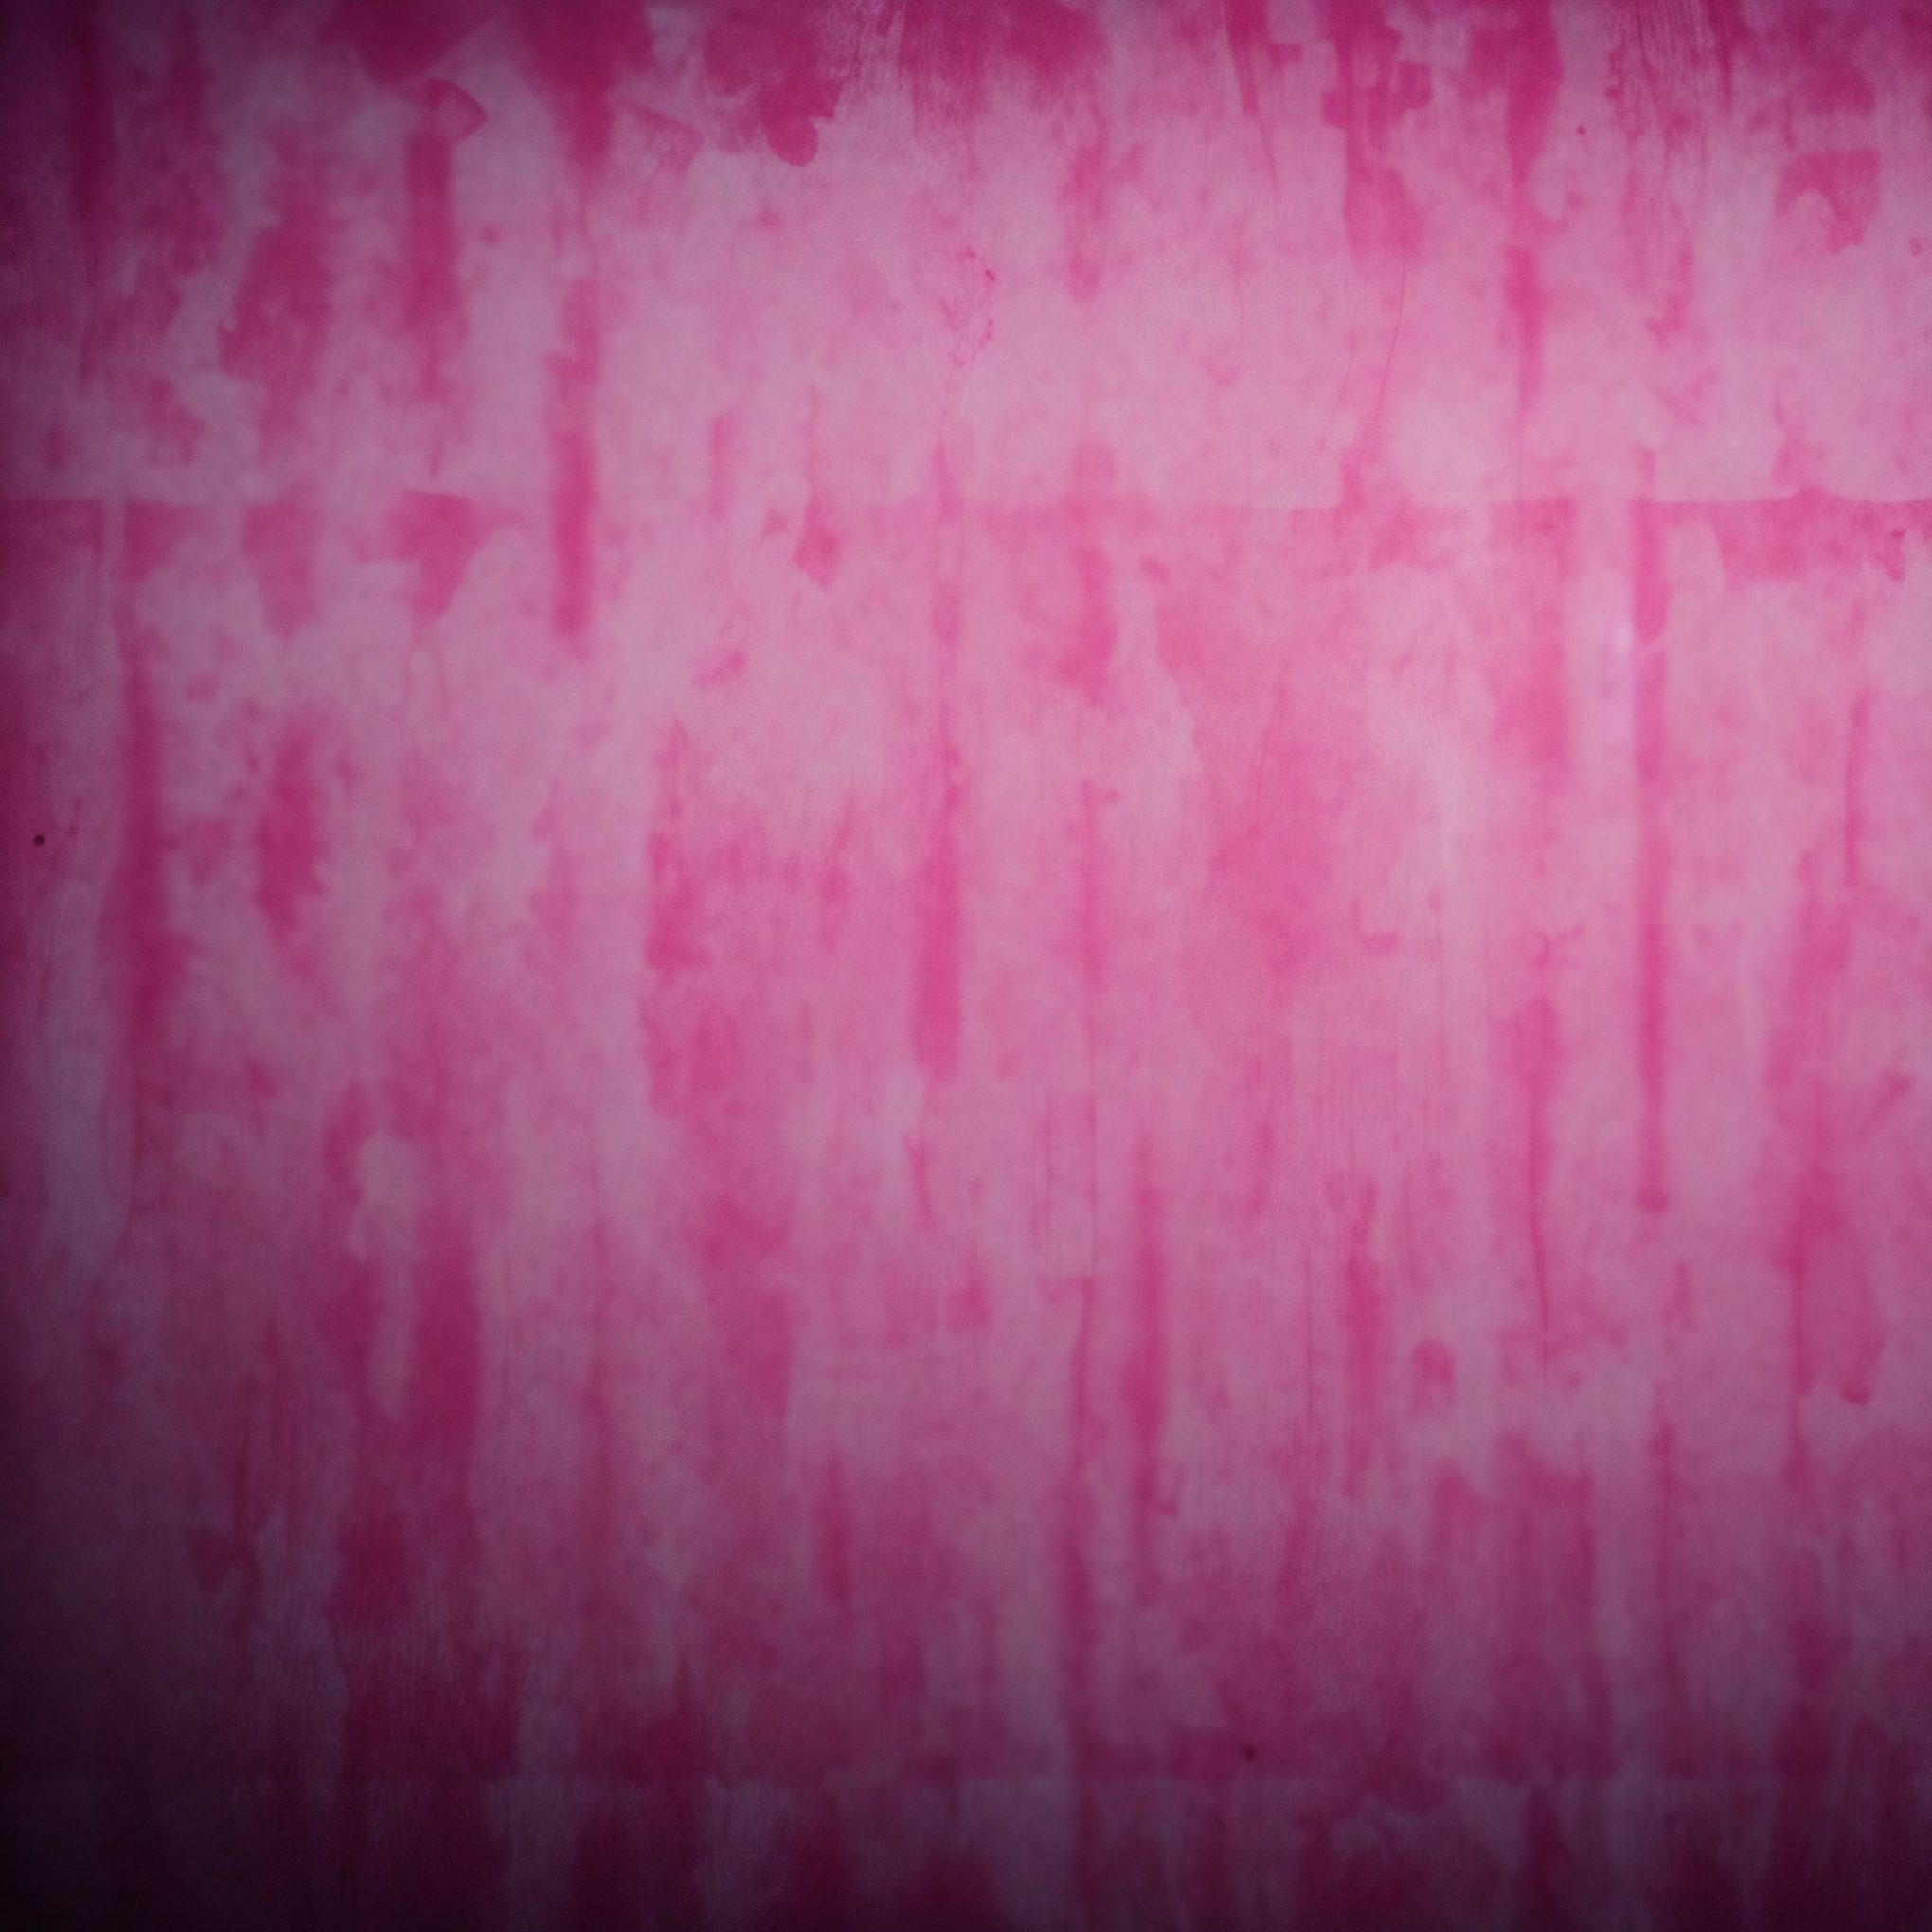 Hot Pink Grunge Background with Vignette